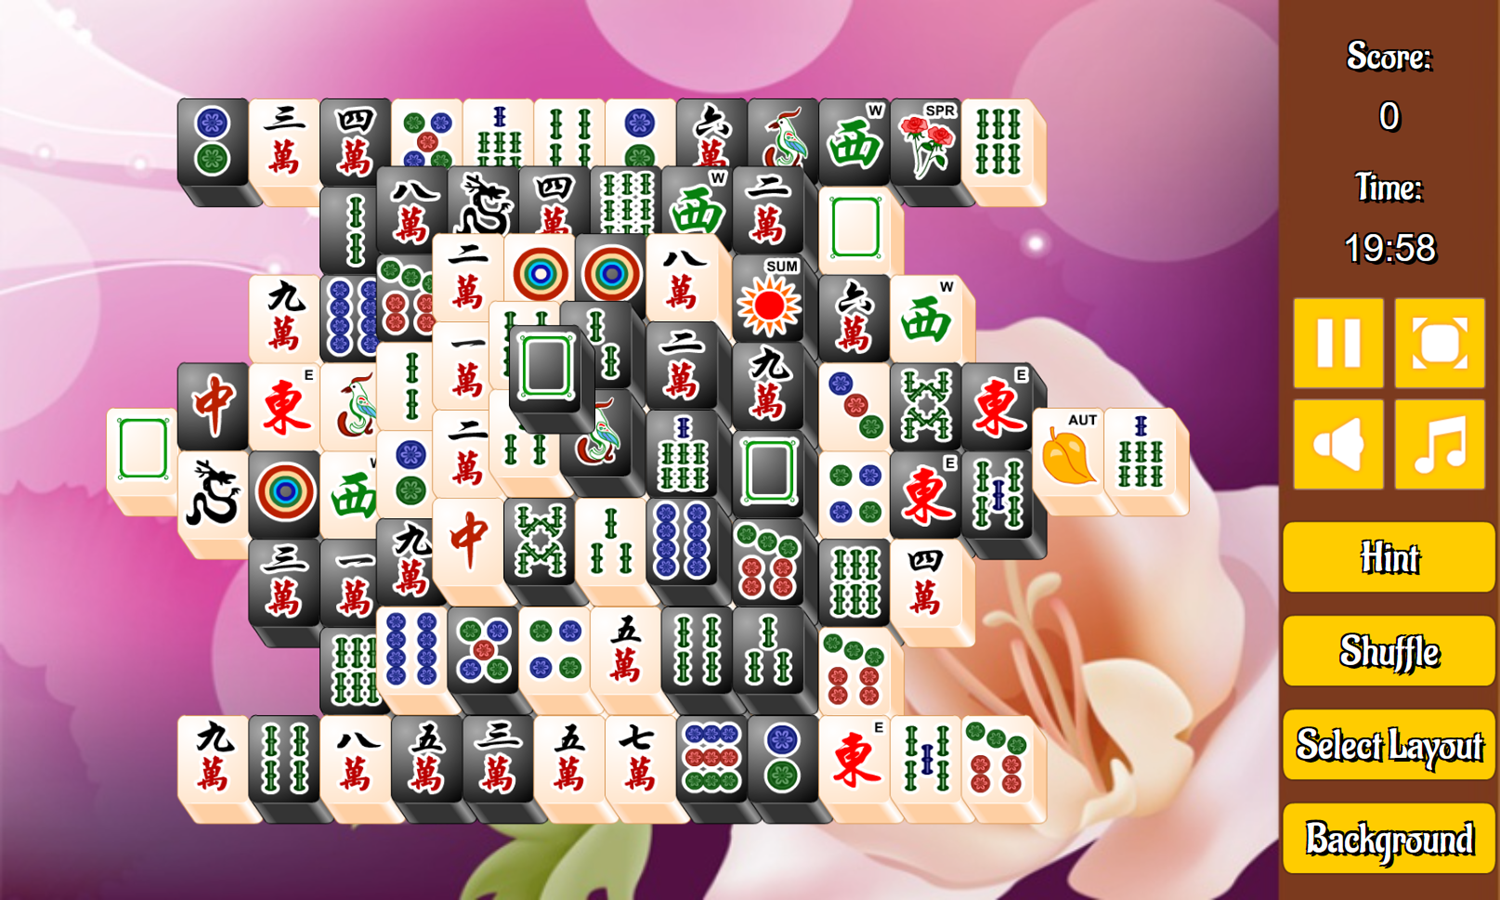 Black and White Mahjong Game Level Start Screenshot.